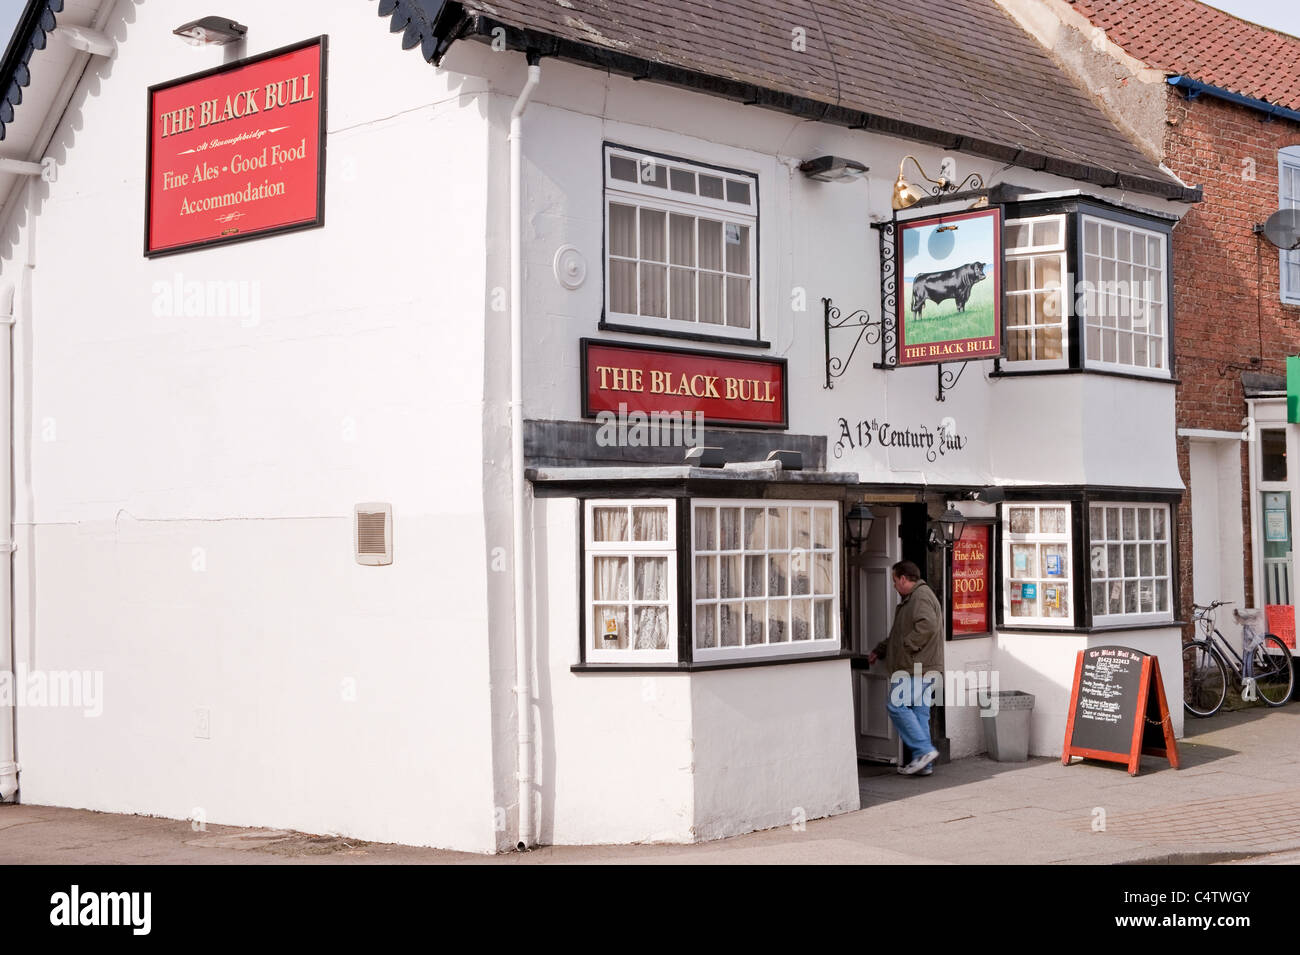 The Black Bull exterior (traditional historic whitewashed English pub or inn) name signs & man entering - Boroughbridge, Yorkshire, England, UK. Stock Photo